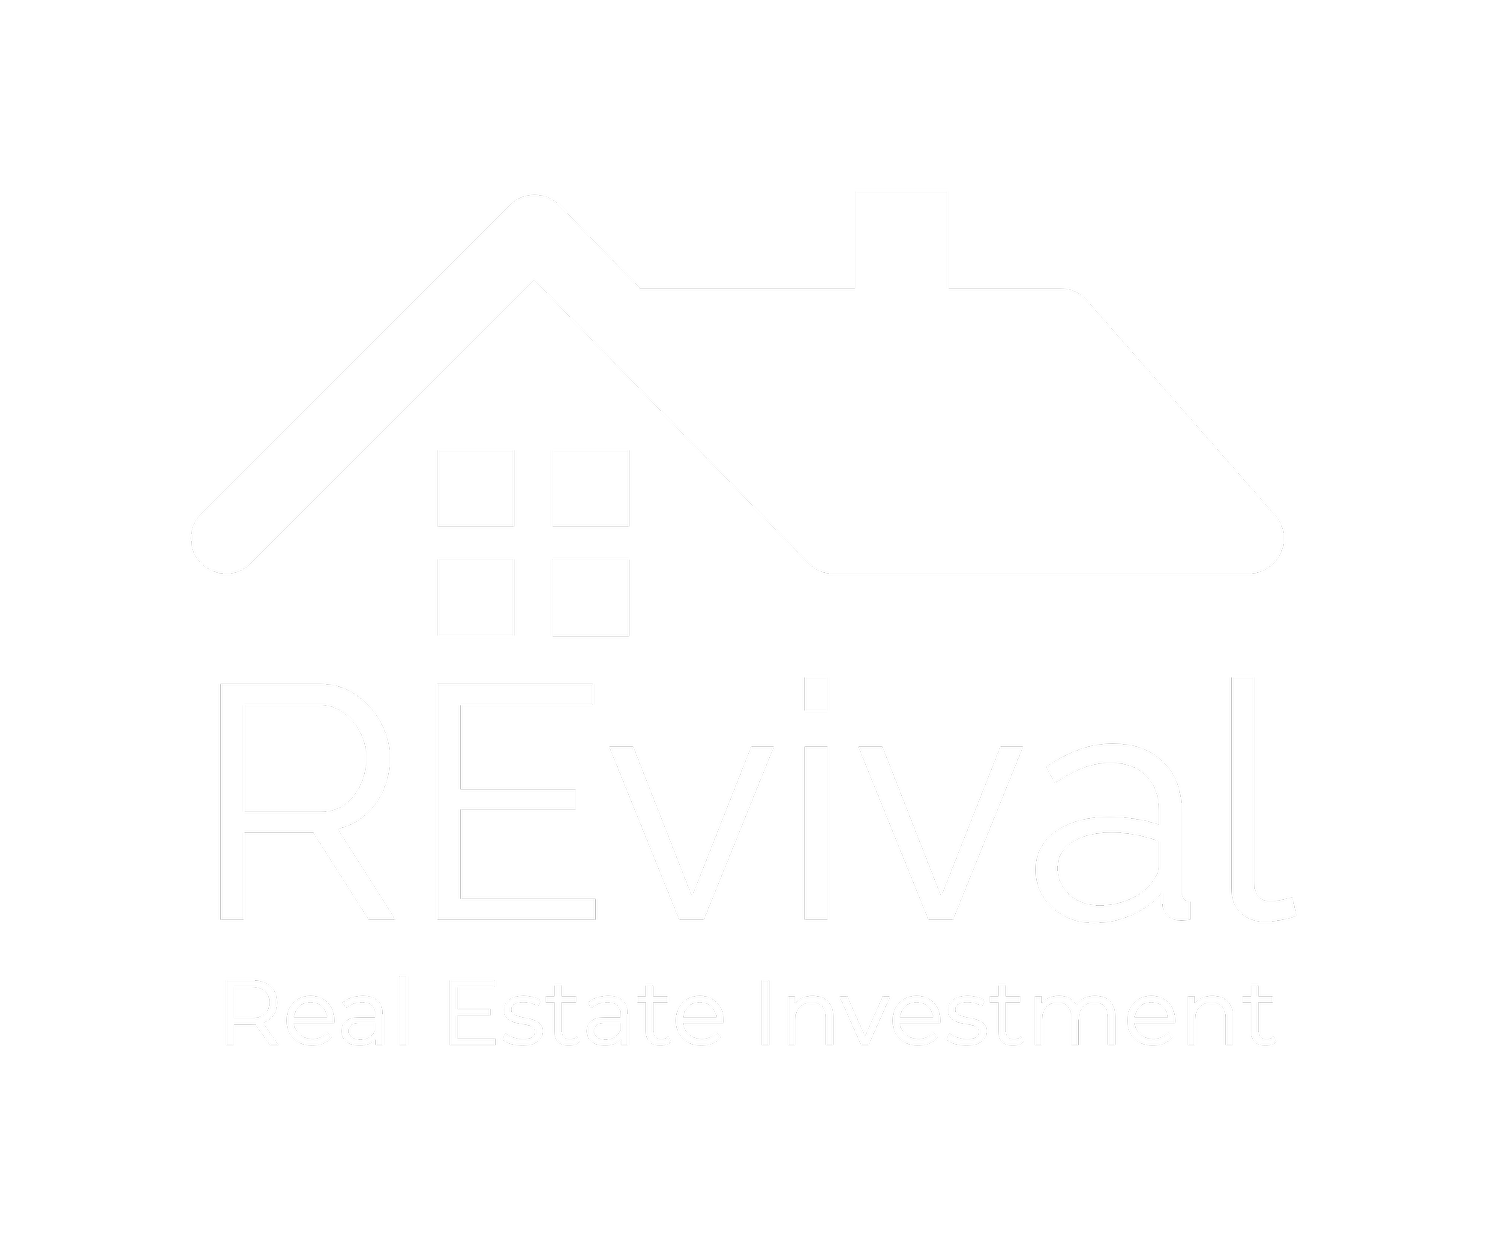 Real Estate Revival